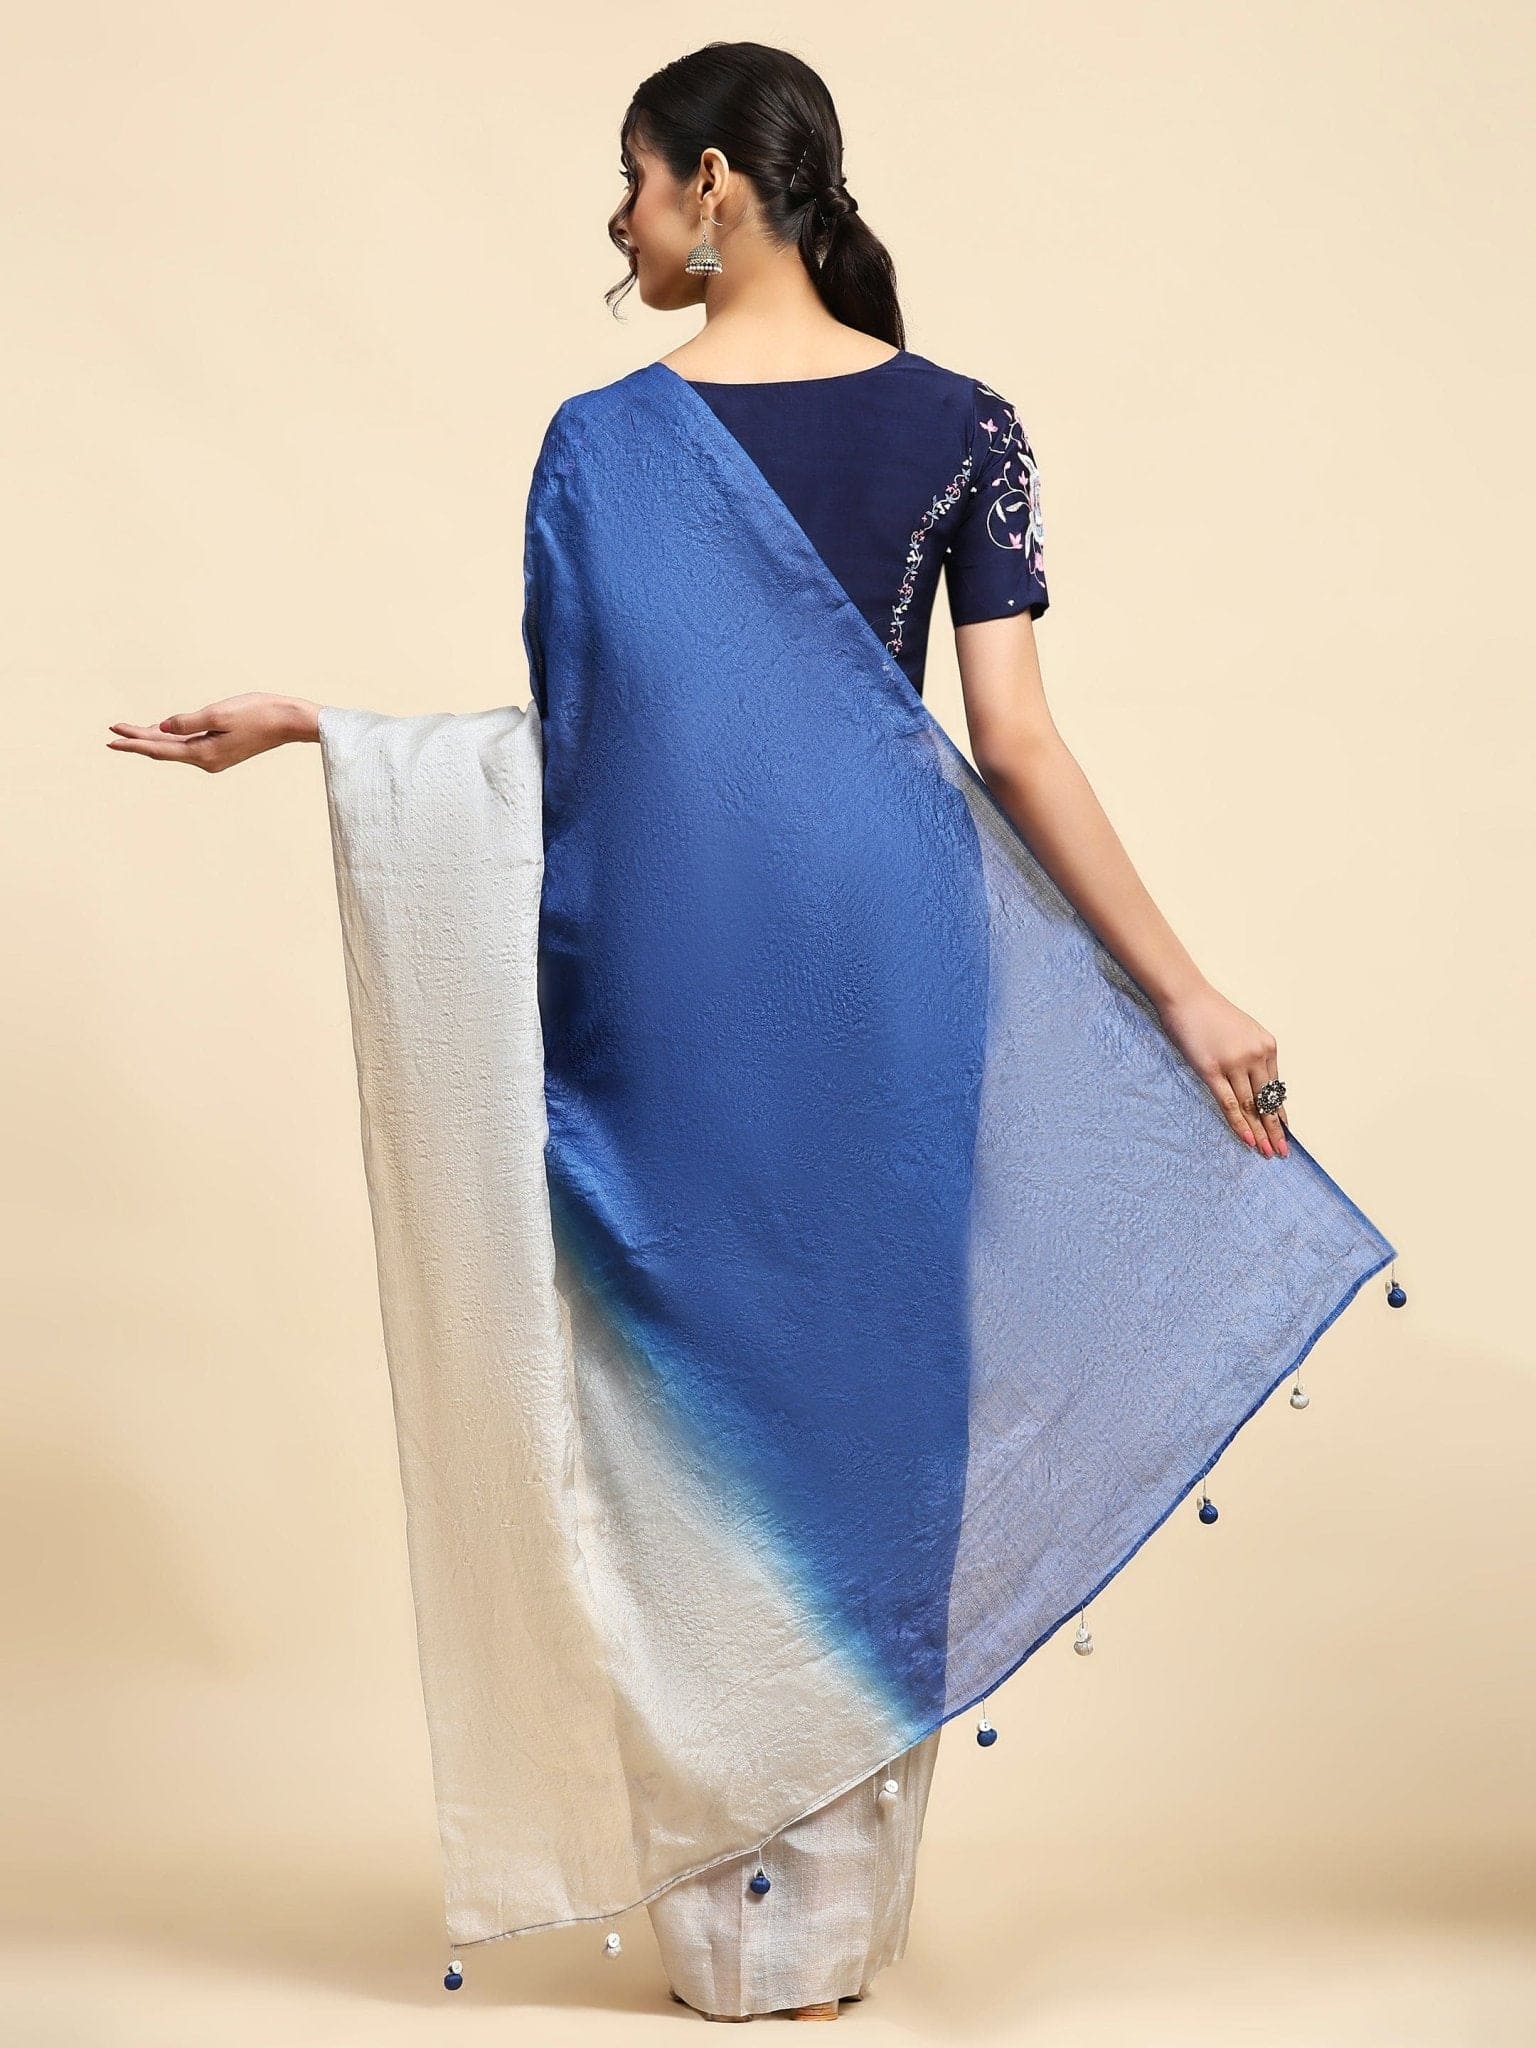 Blue & White Tussar Silk Saree - Charkha TalesBlue & White Tussar Silk Saree